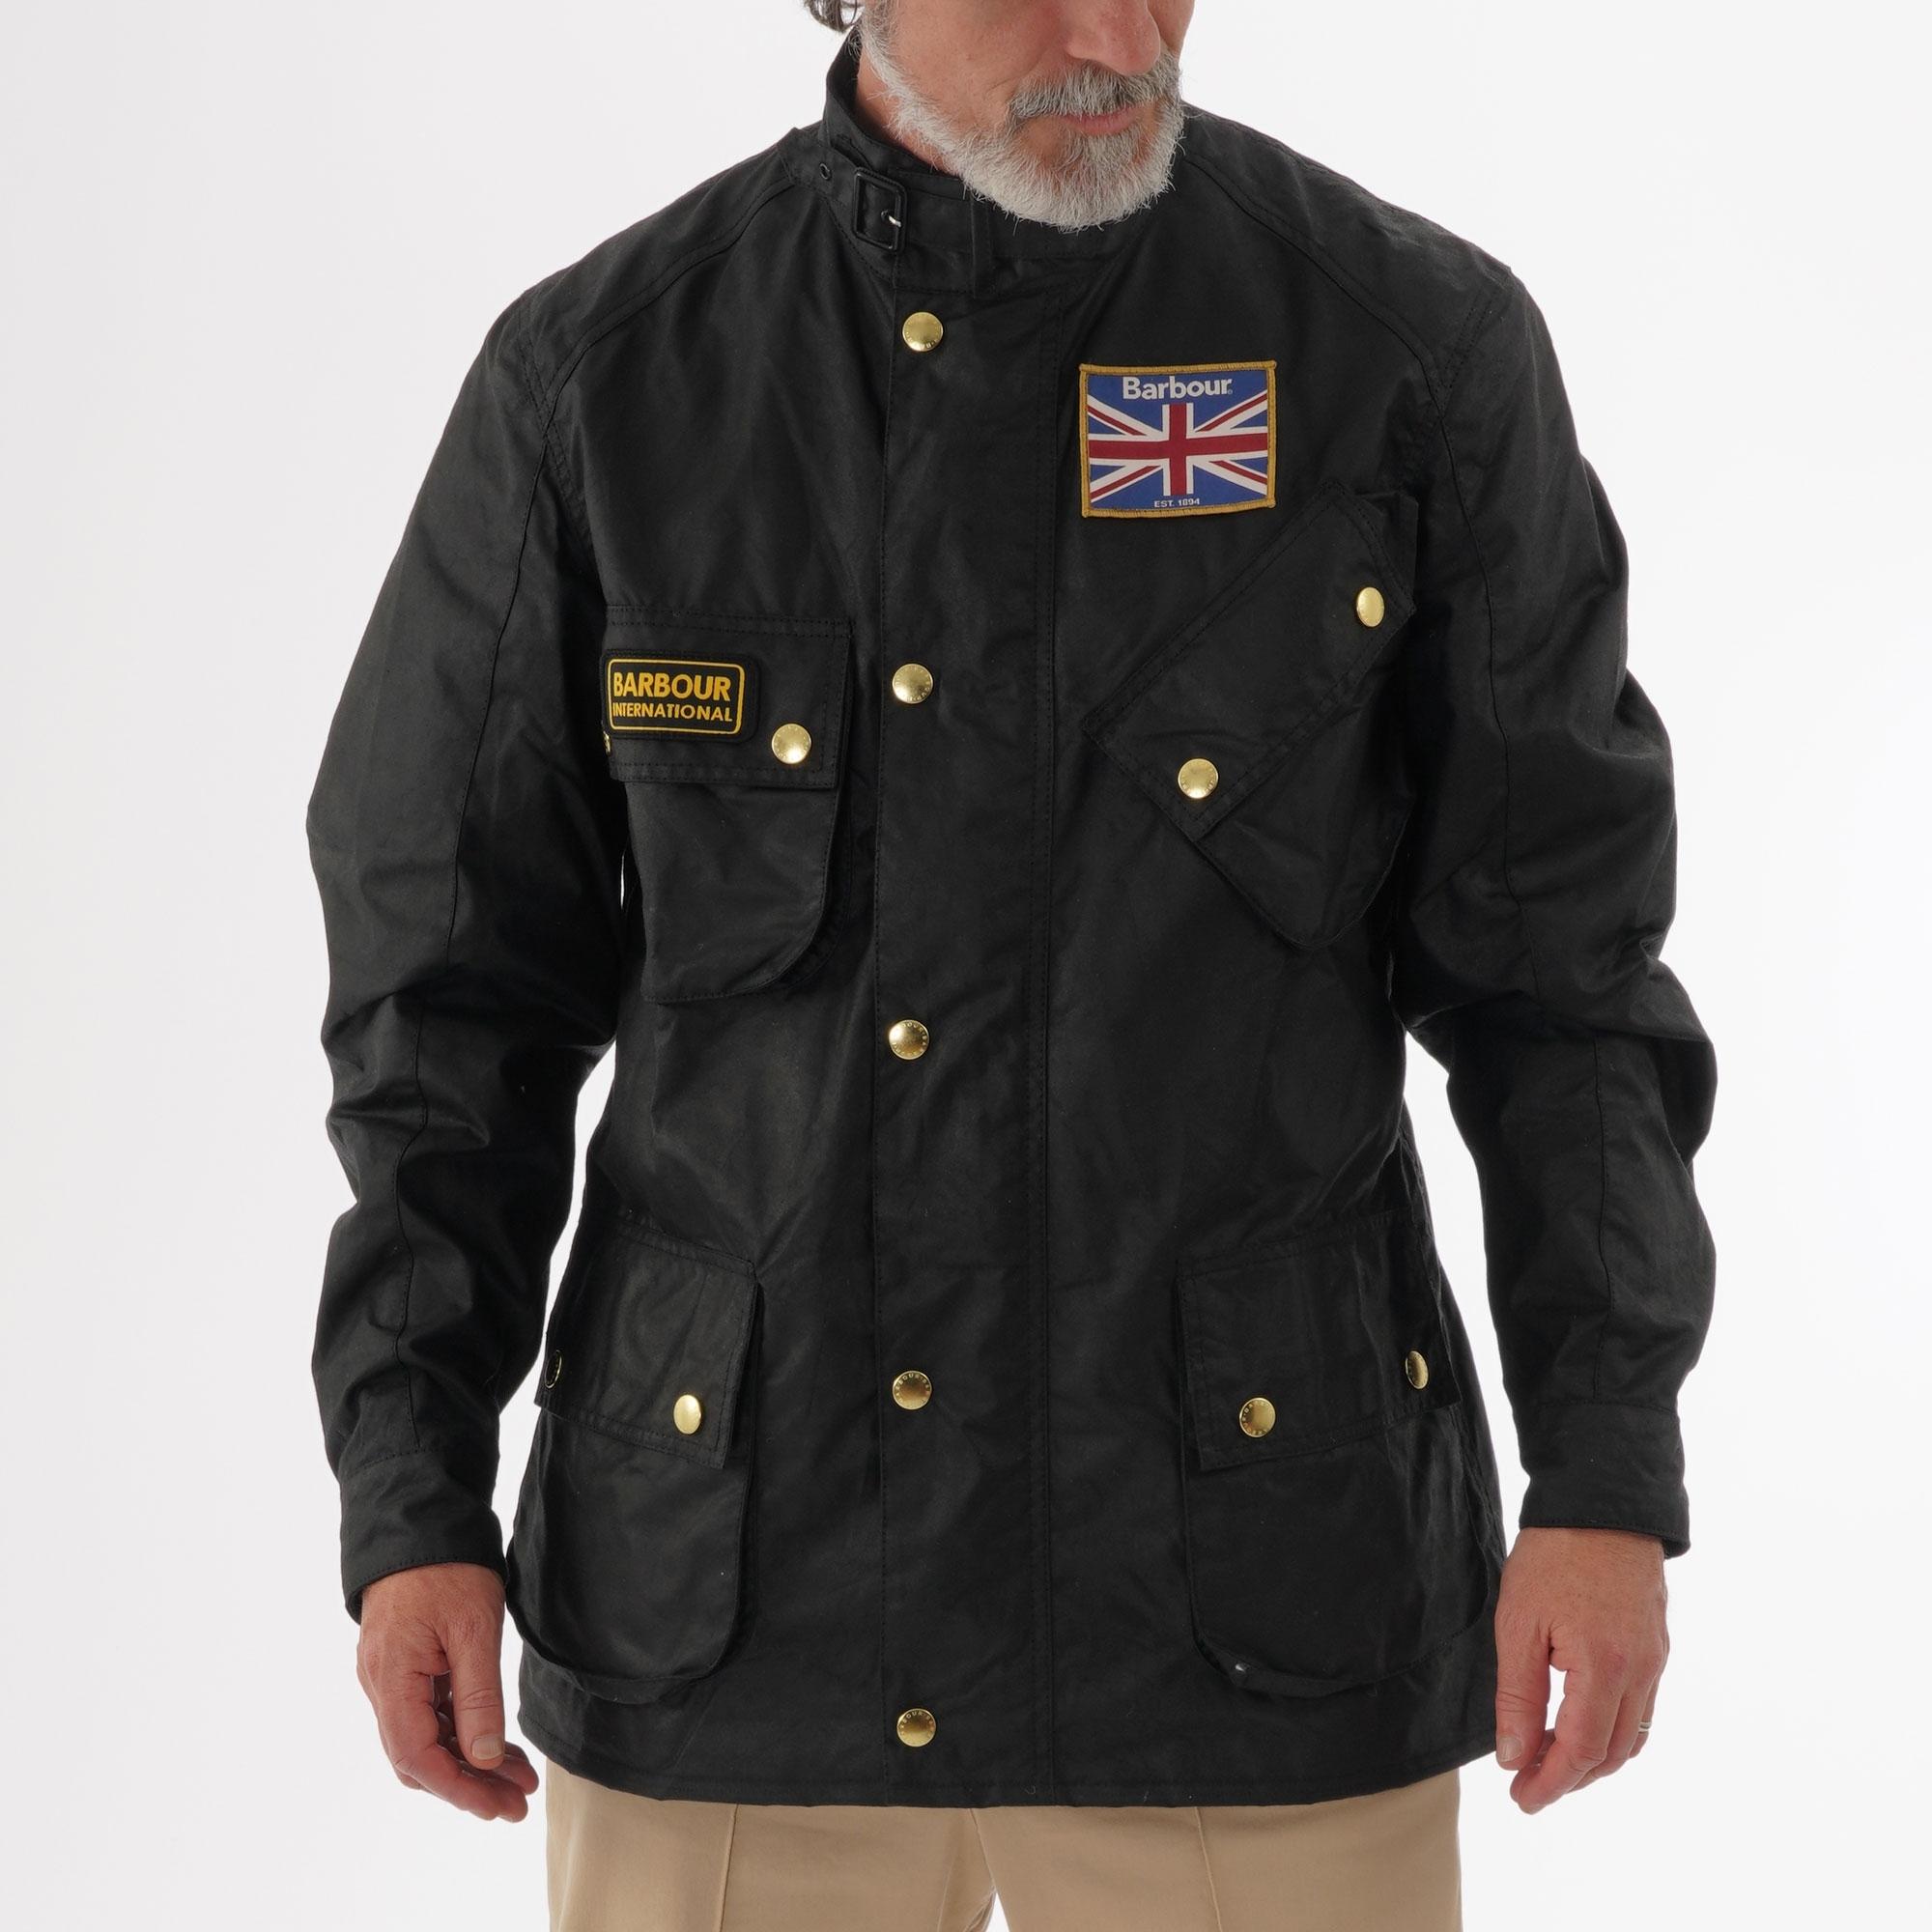 barbour international jacket union jack